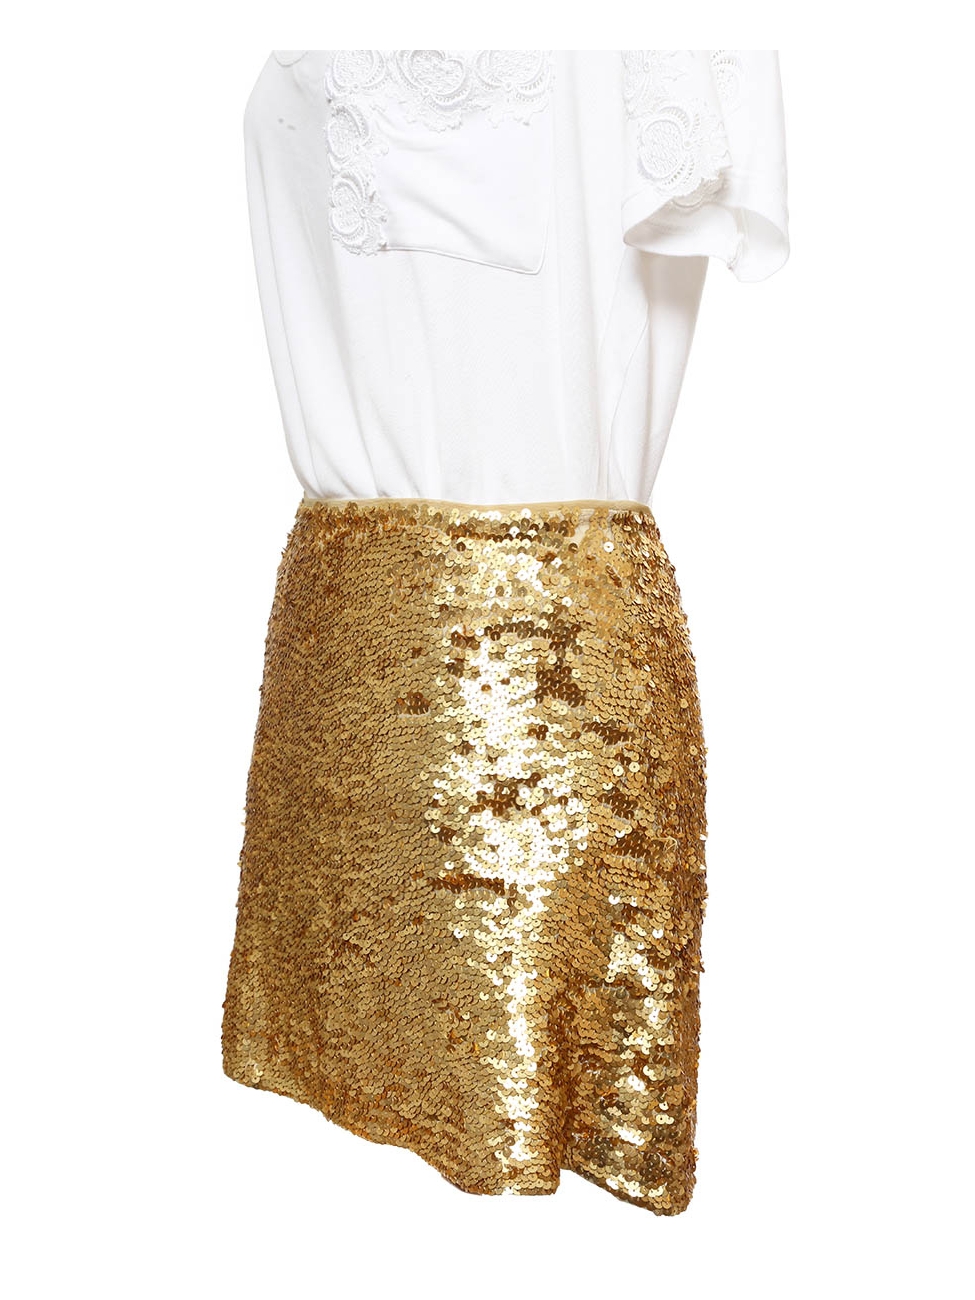 Bronze mini skirts size 25 Louise Paris Pinko Embroidered Gold Sequins Mini Skirt Retail Price 280 Size M